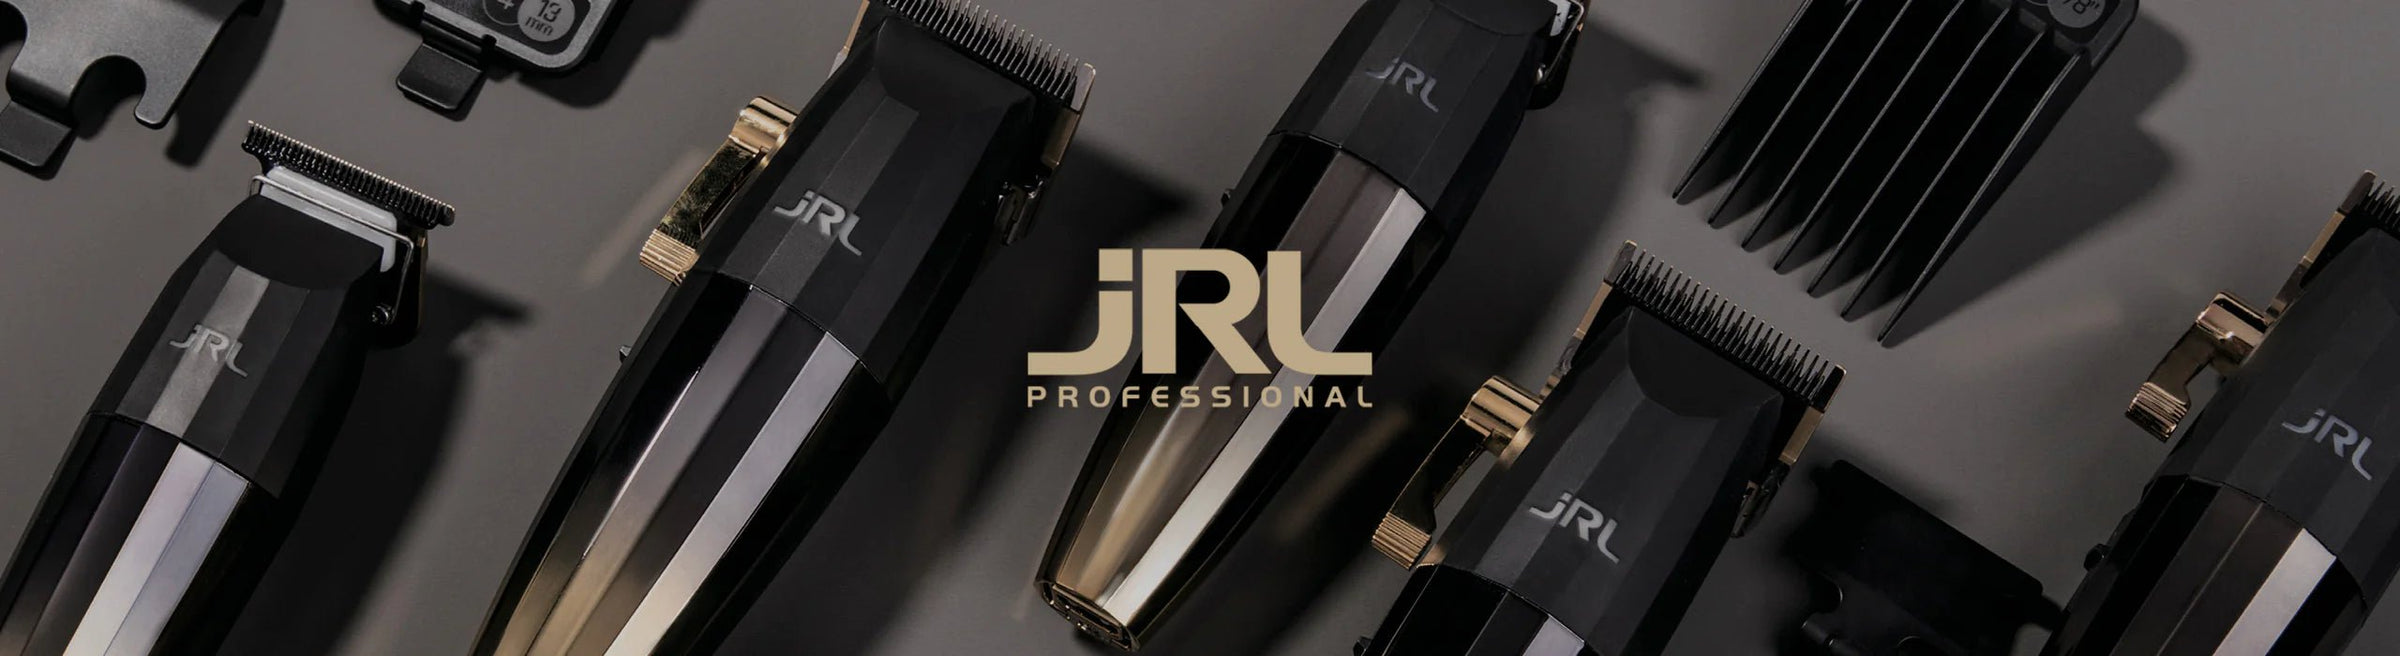 Jrl Professional - Planethair